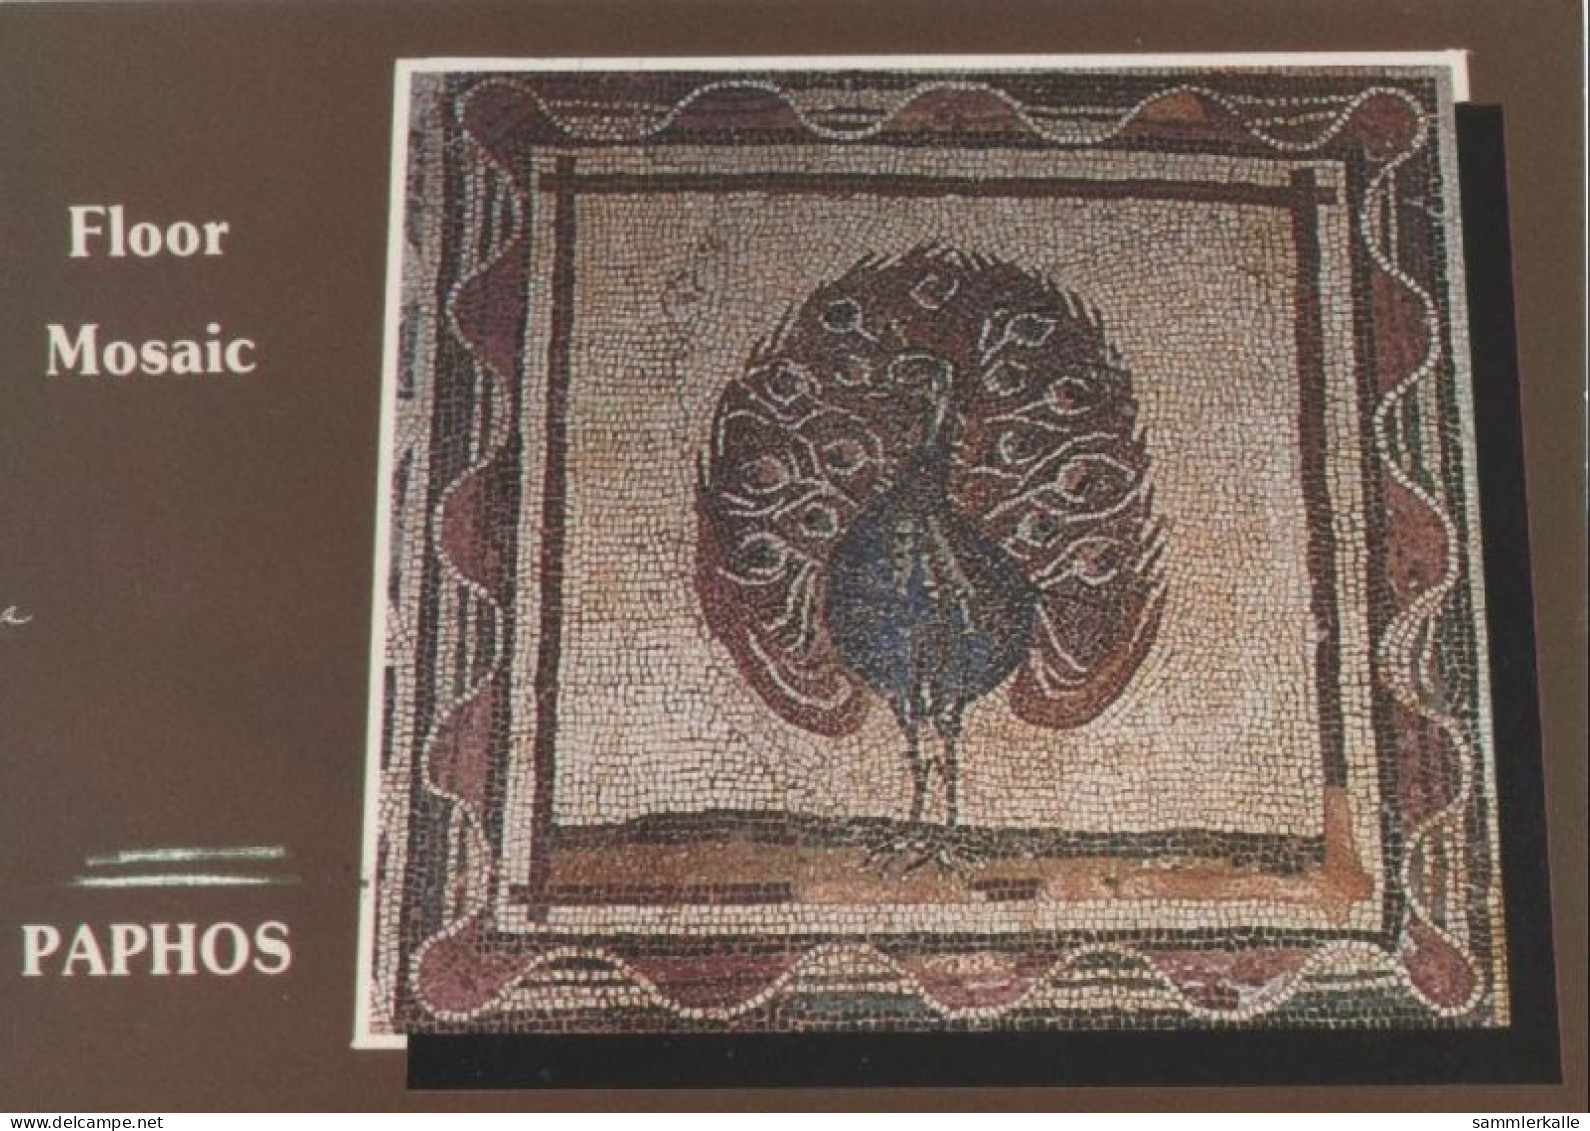 95040 - Paphos - Zypern - Floor Mosaic - Cyprus